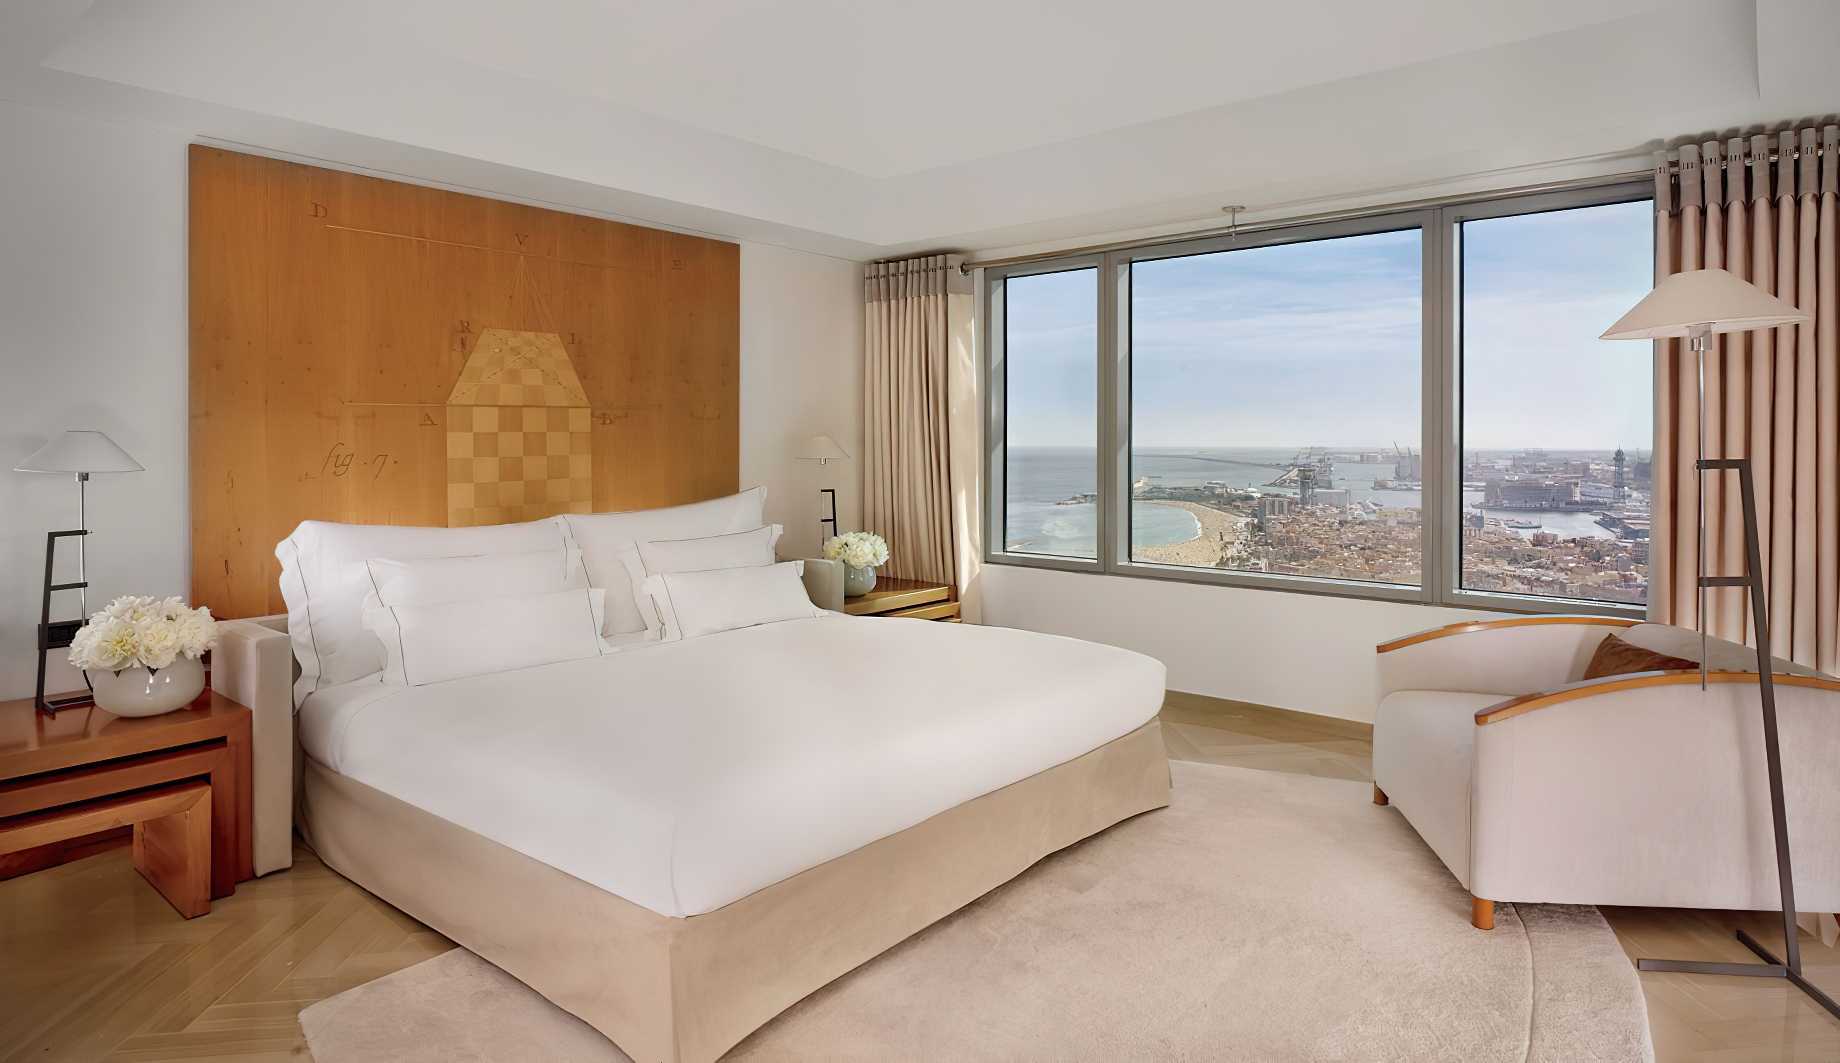 Hotel Arts Barcelona Ritz-Carlton – Barcelona, Spain – The Barcelona Penthouse Bedroom